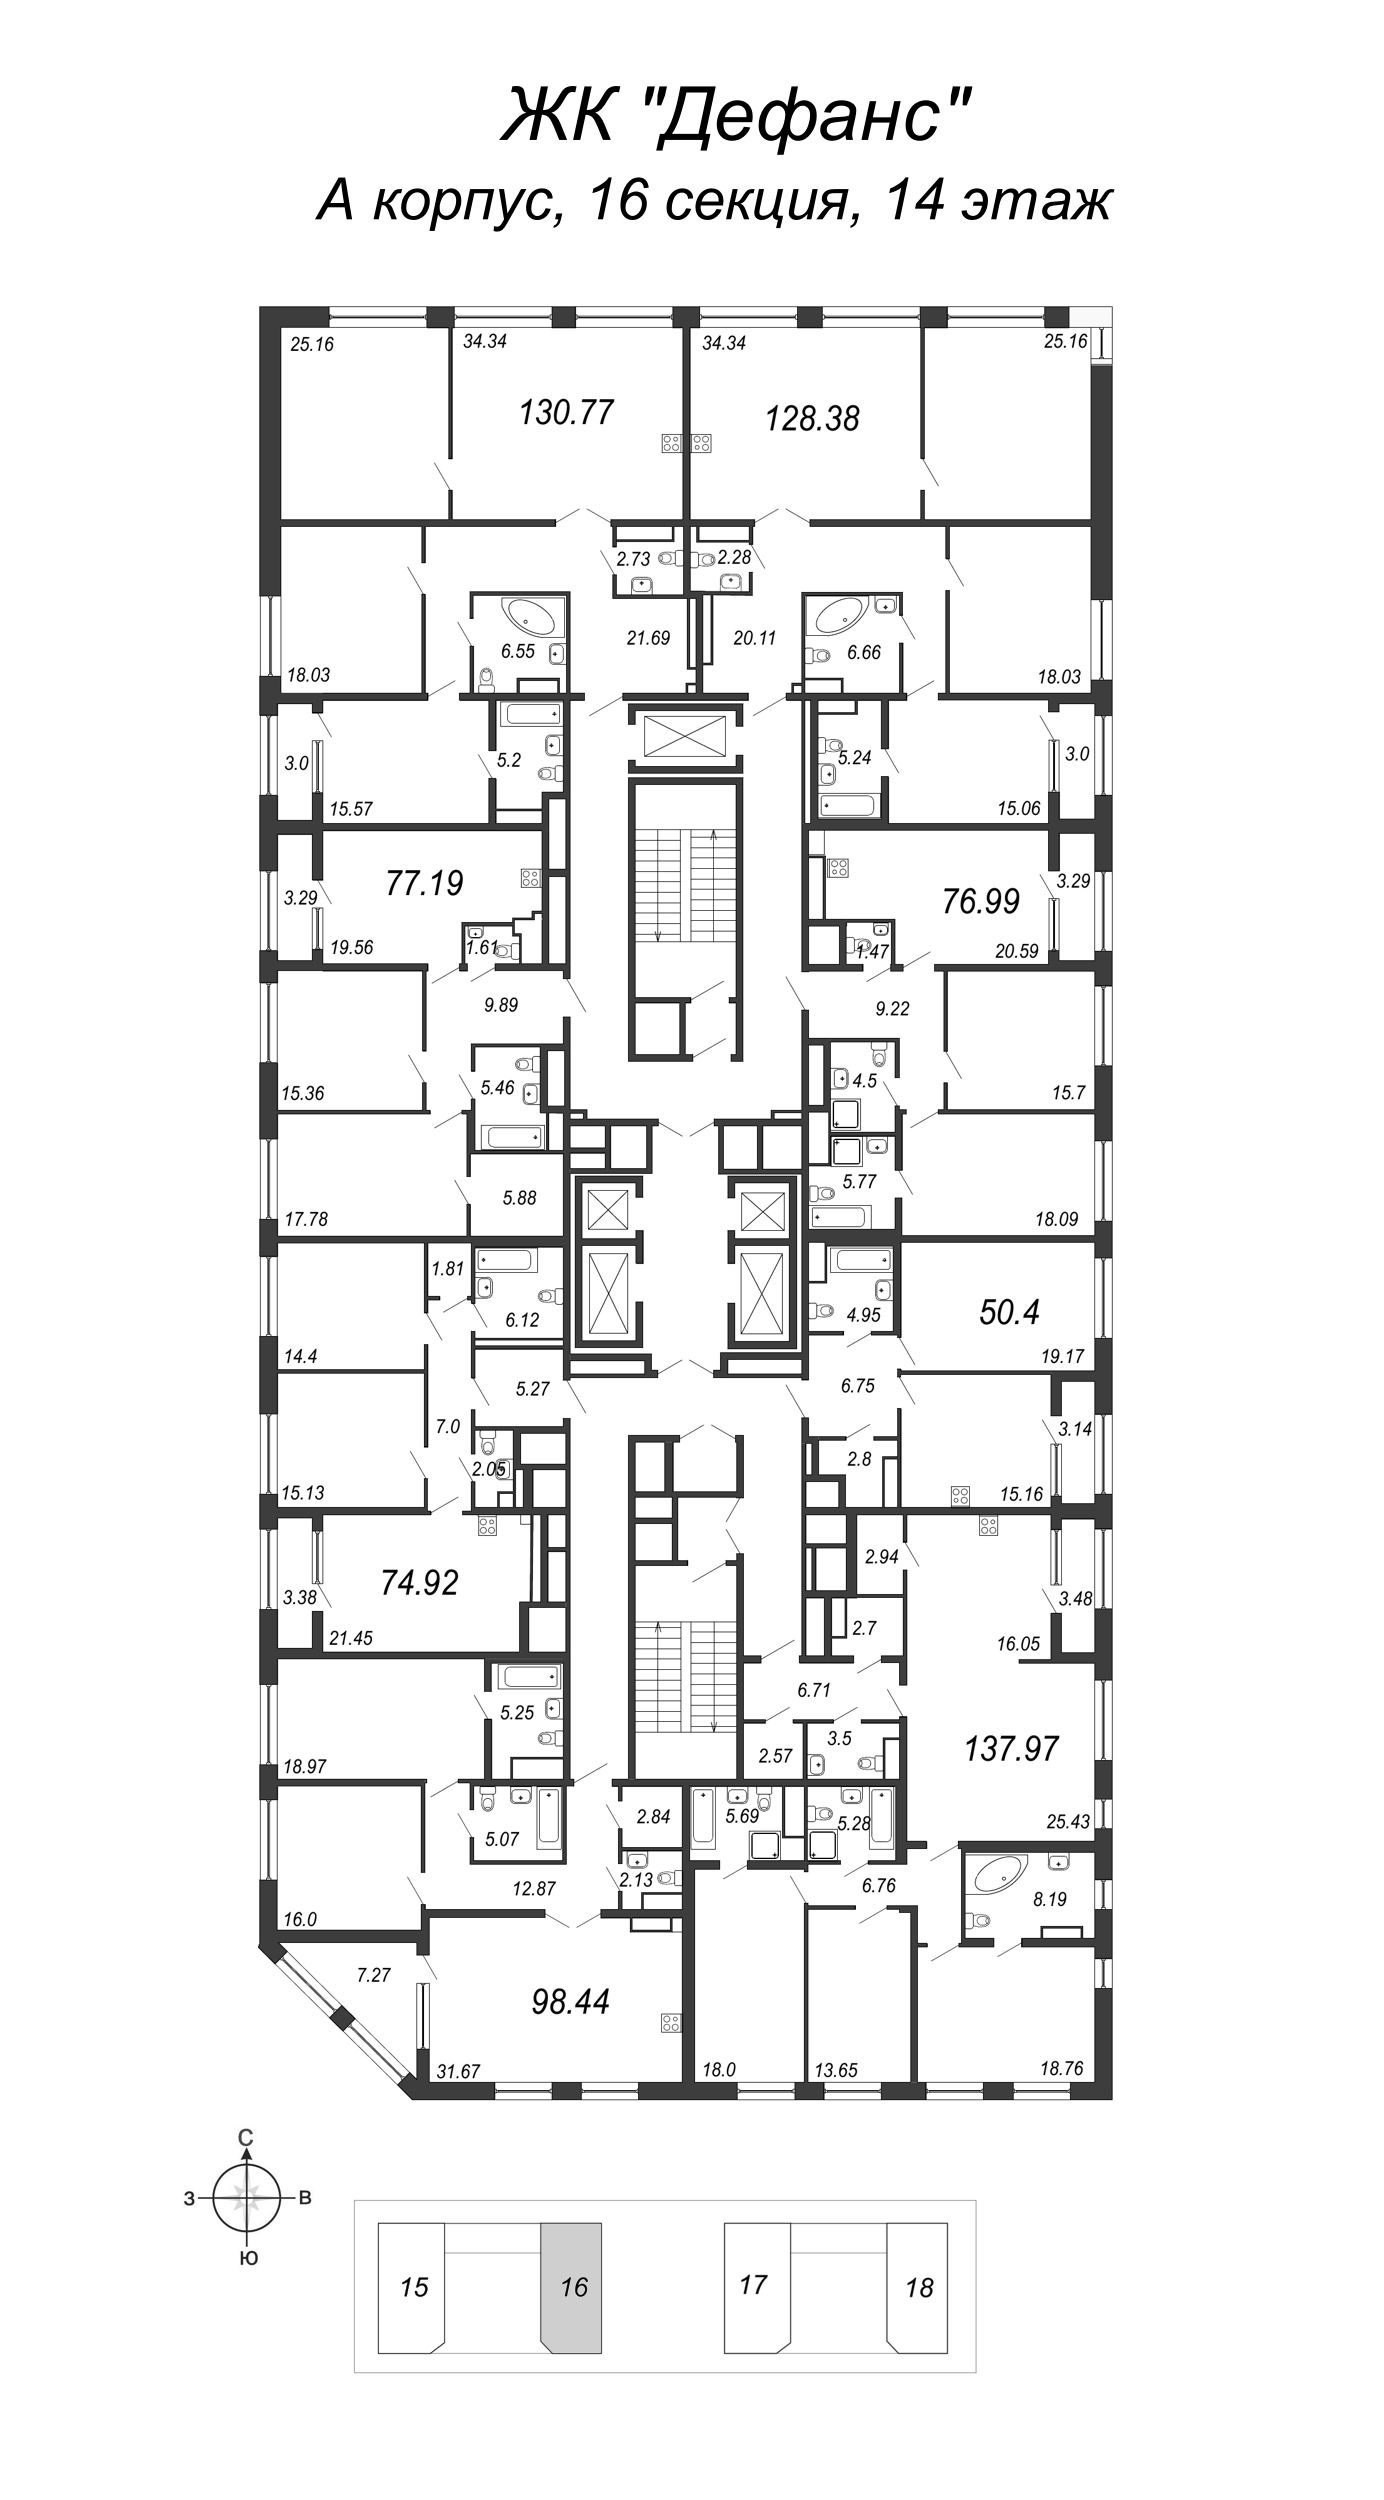 4-комнатная (Евро) квартира, 128.38 м² - планировка этажа